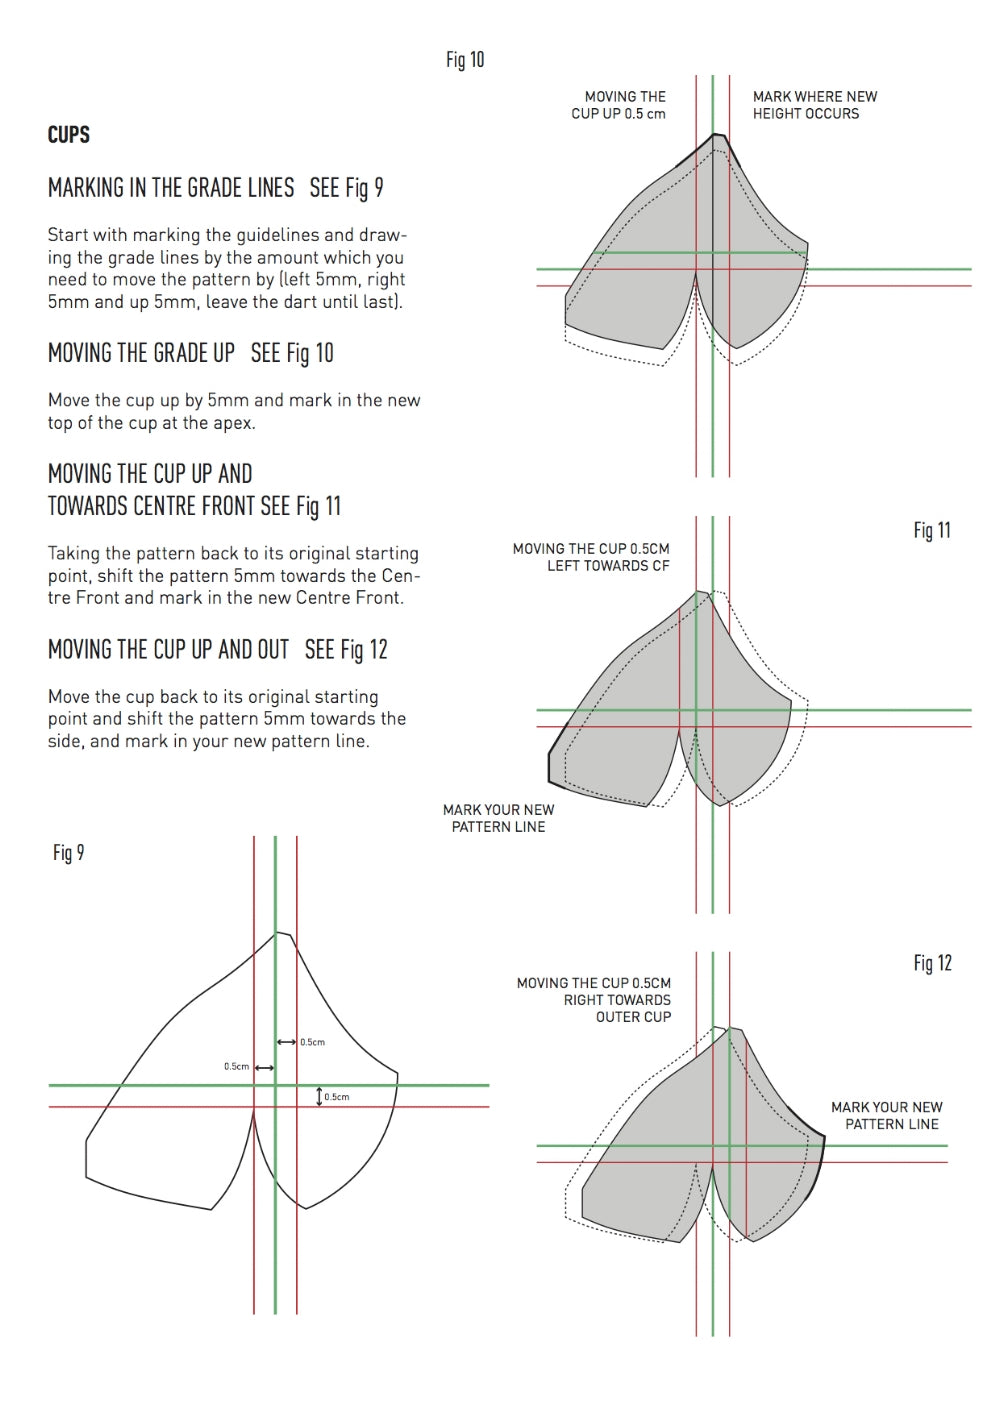 EBook: Van Jonsson Design- How to grade a bra and brief